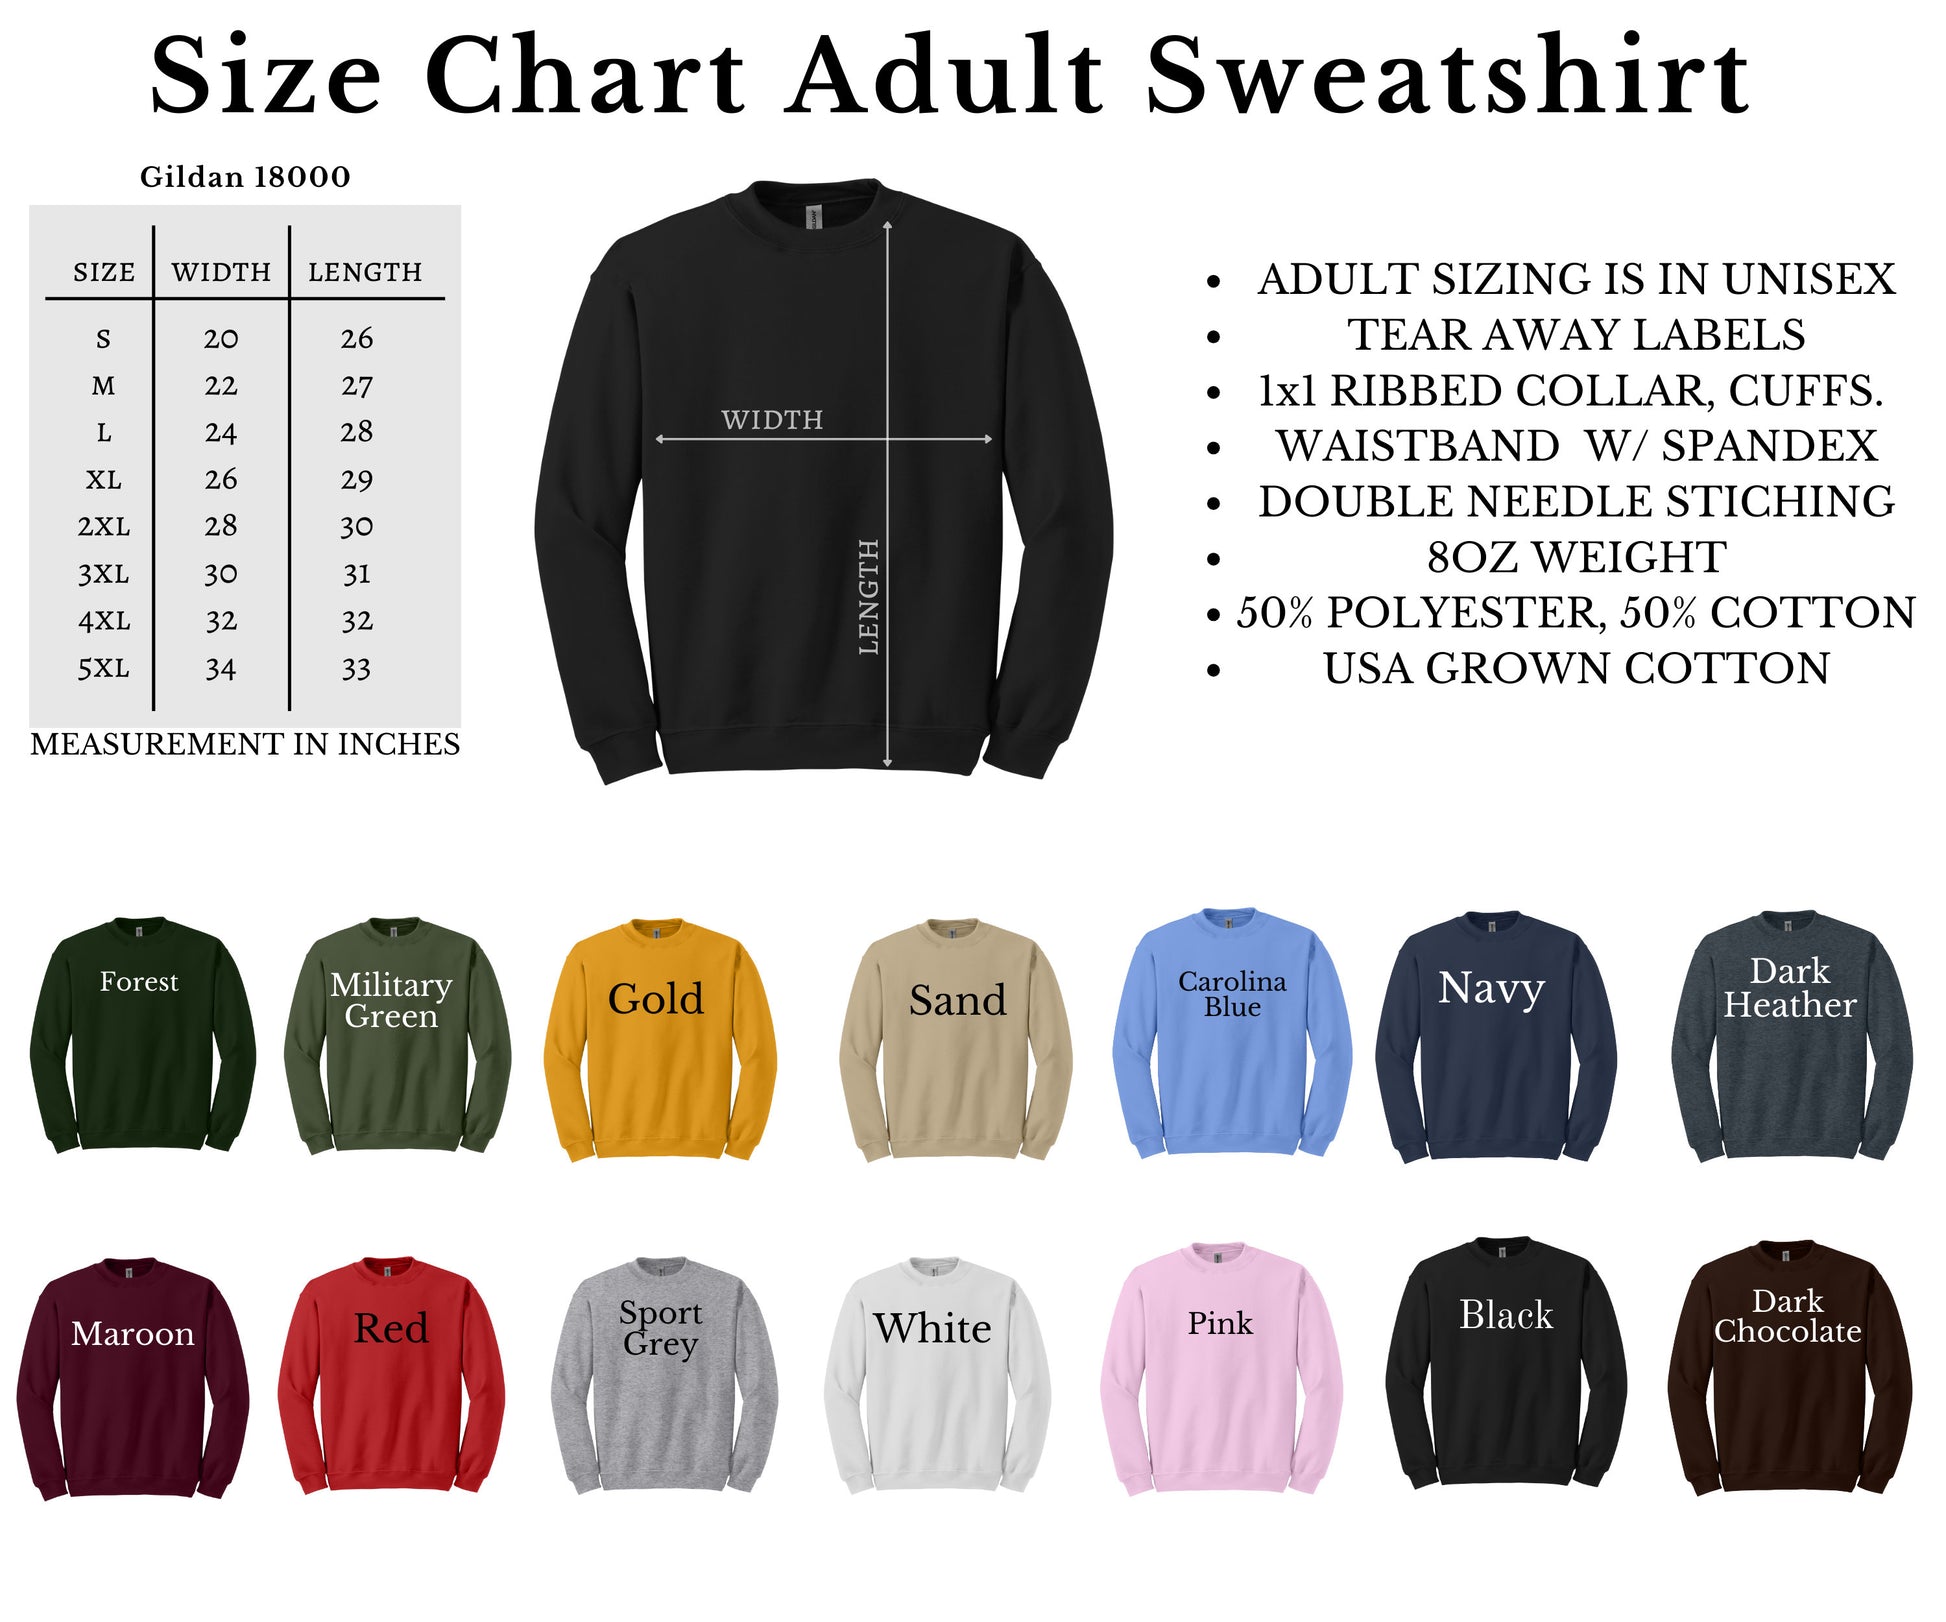 Not Mommy’s Favorite Sweatshirt, Not Mommy’s Favorite Shirt, Not Mommy’s Favorite Crewneck, Not Mommys Favorite Sweater, Oversized Sweater